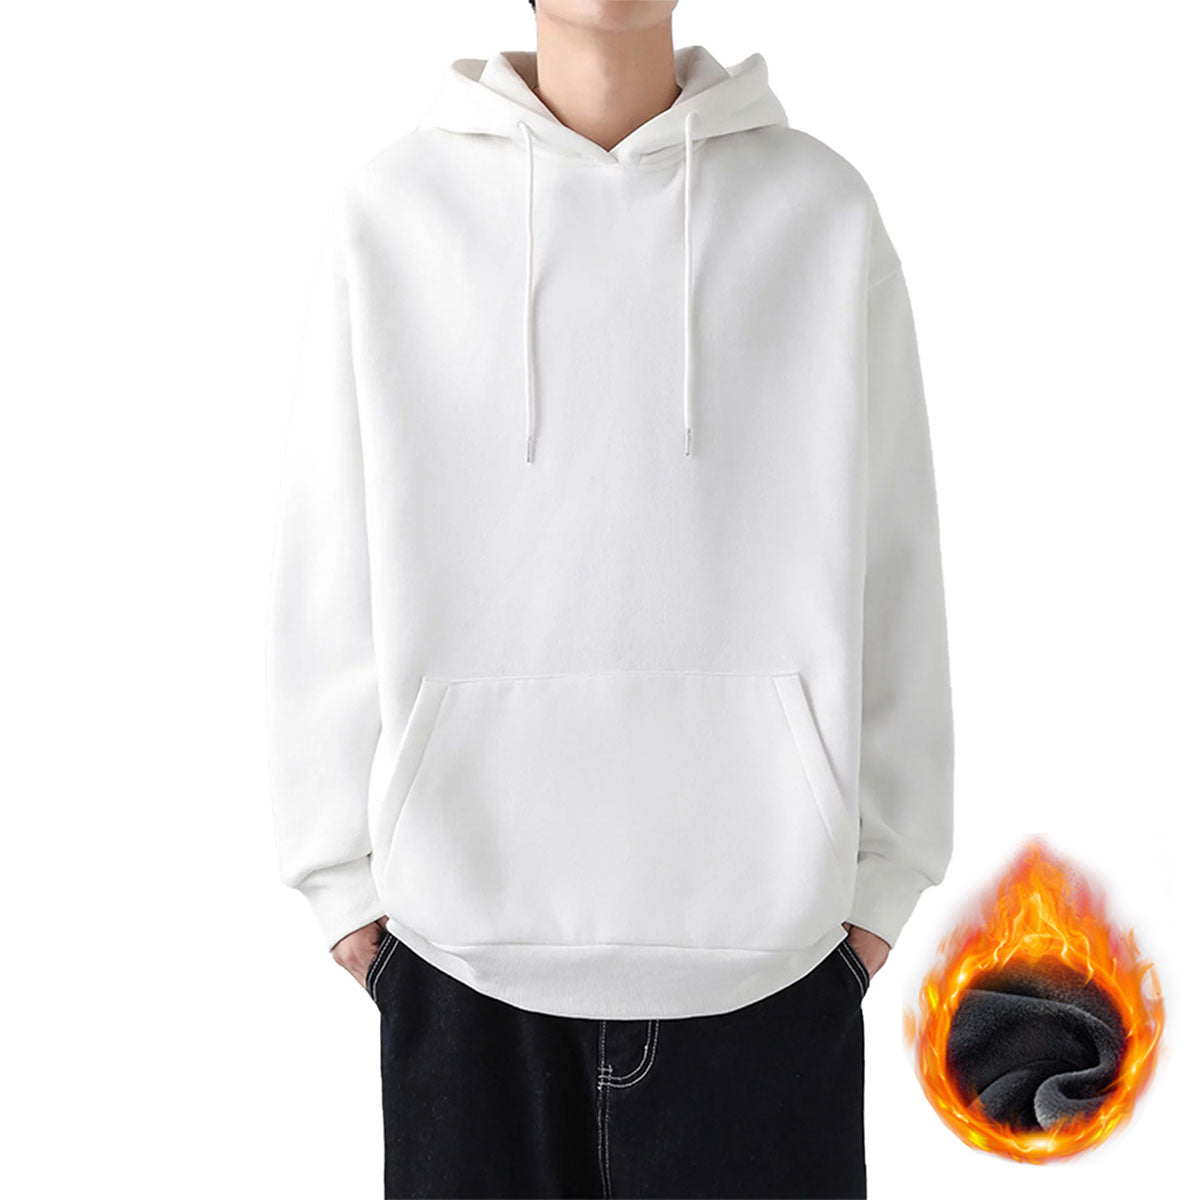 Unisex Pullover Fleece Thick Hoodie Basic Plain Hooded Sweatshirt Jumper